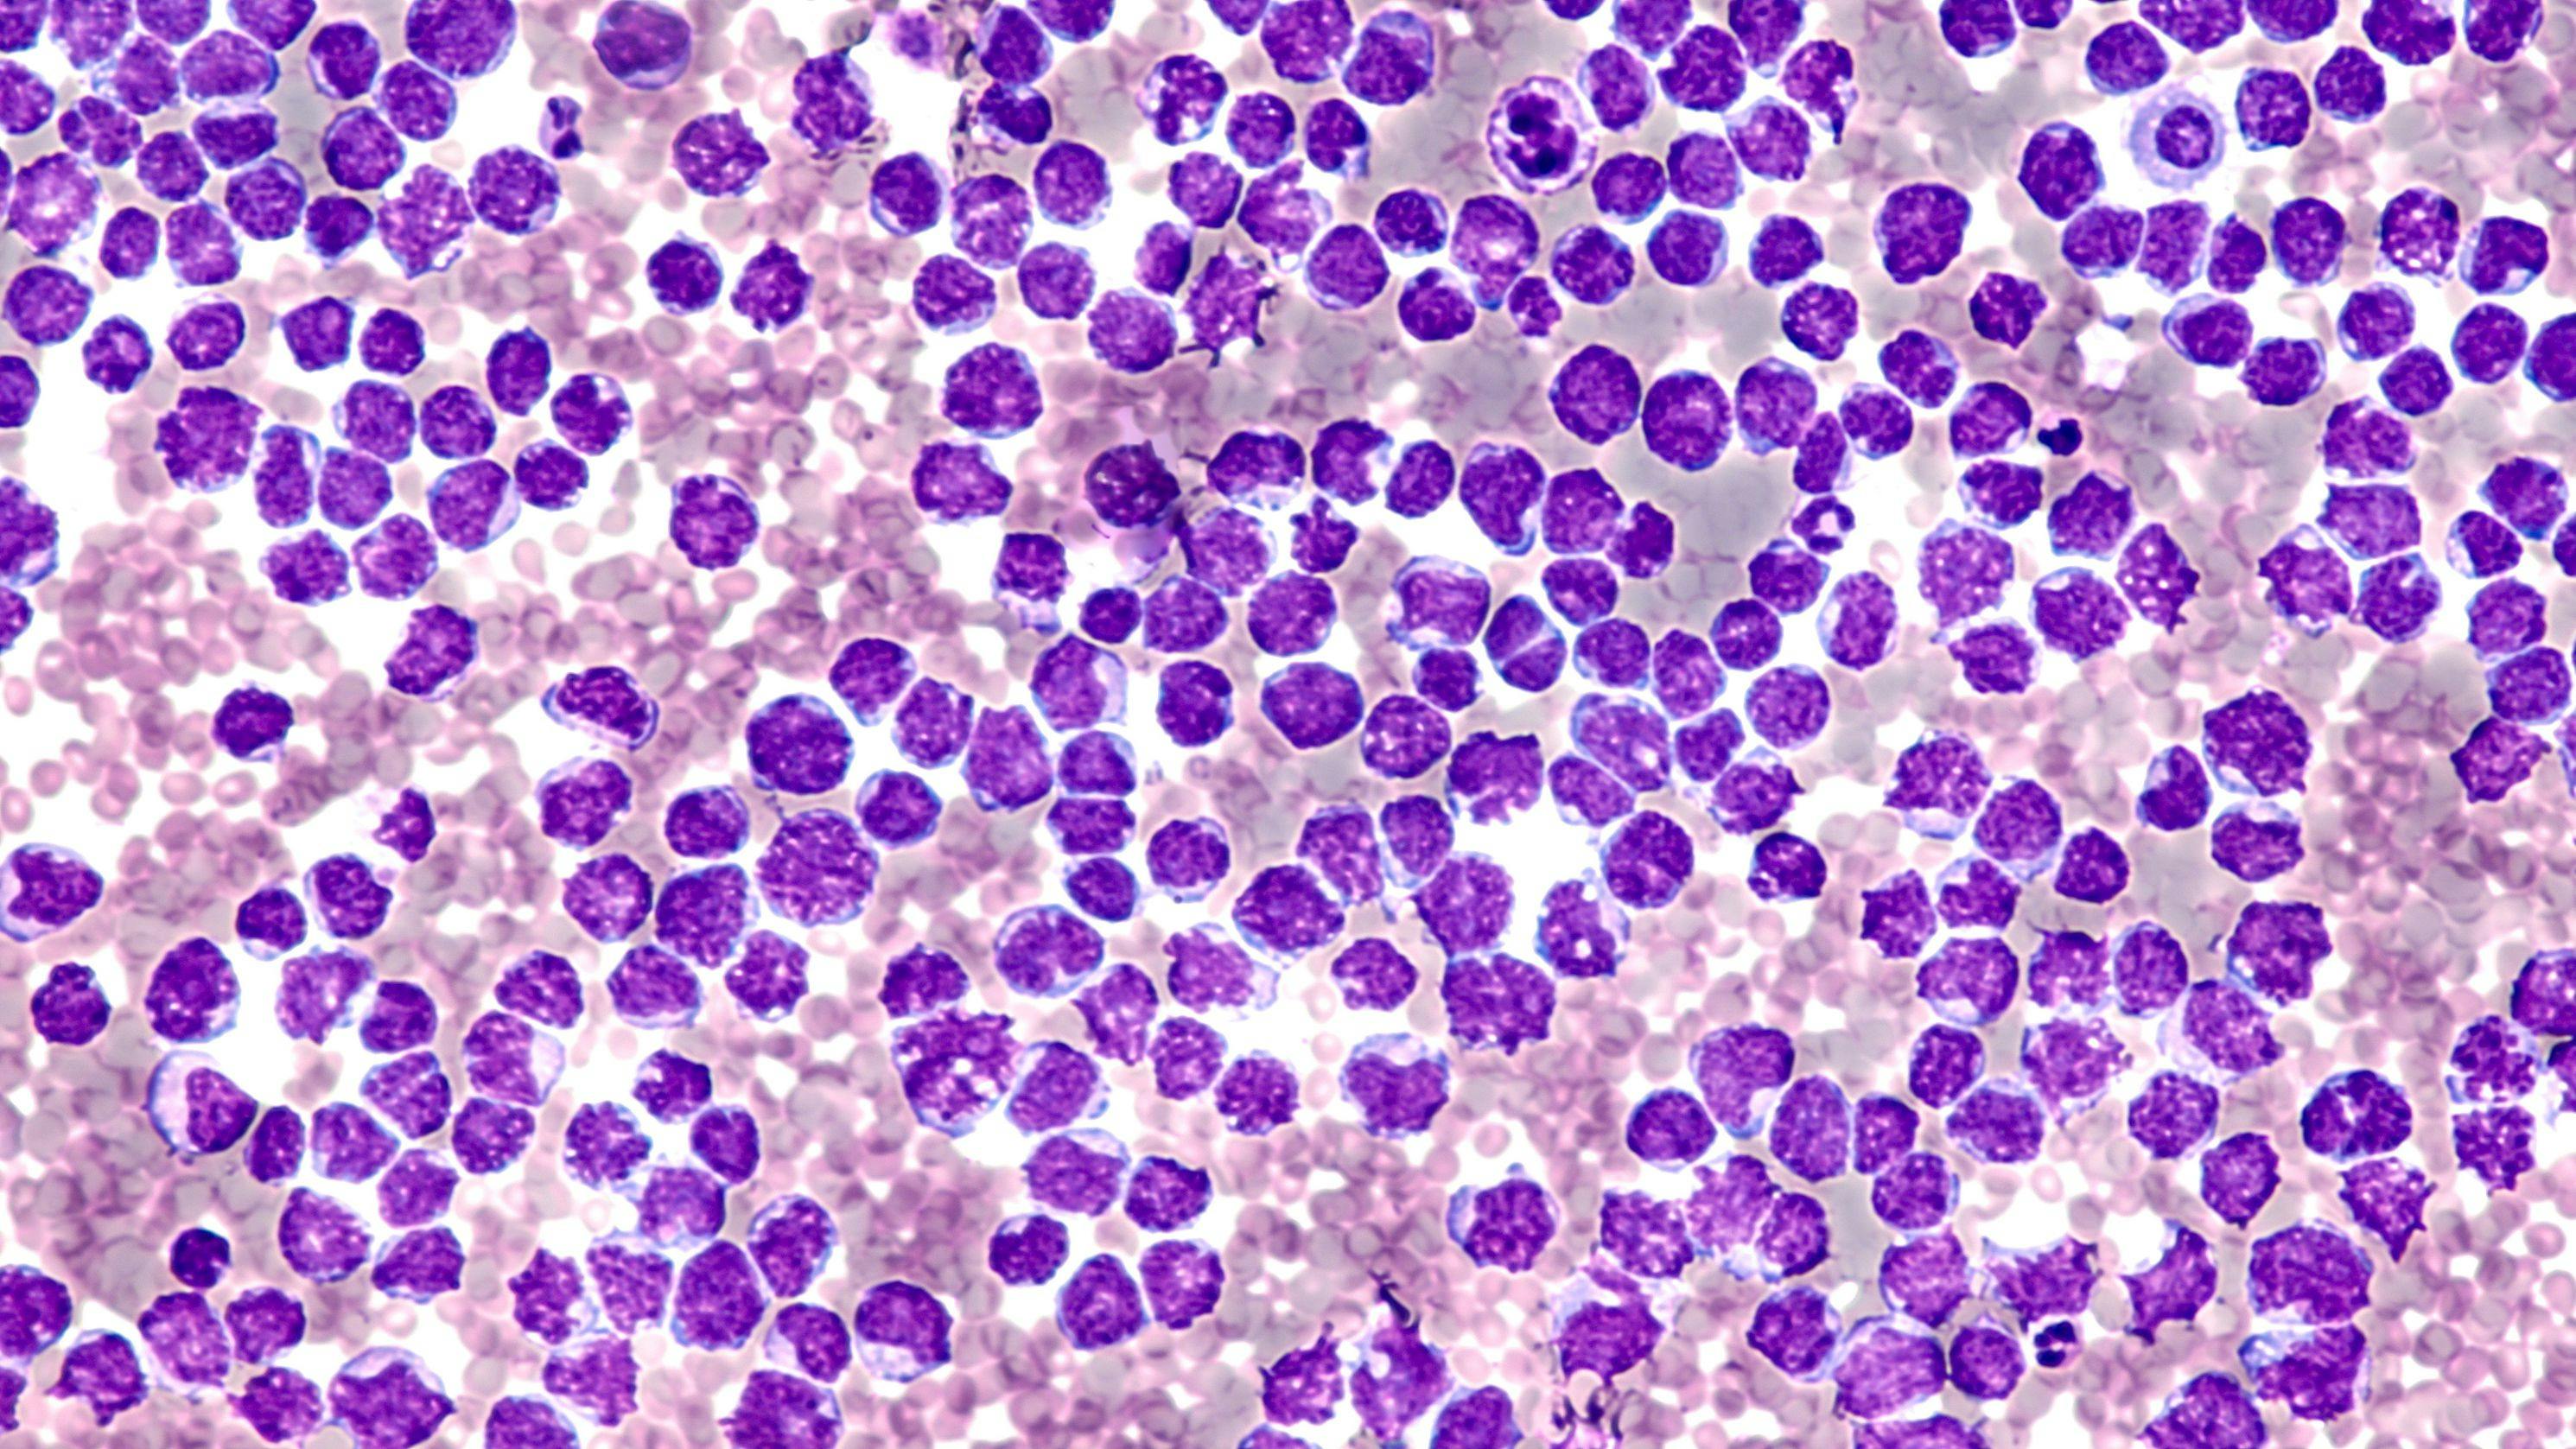 Malignant cells of mantle cell lymphoma: © David A Litman - stock.adobe.com